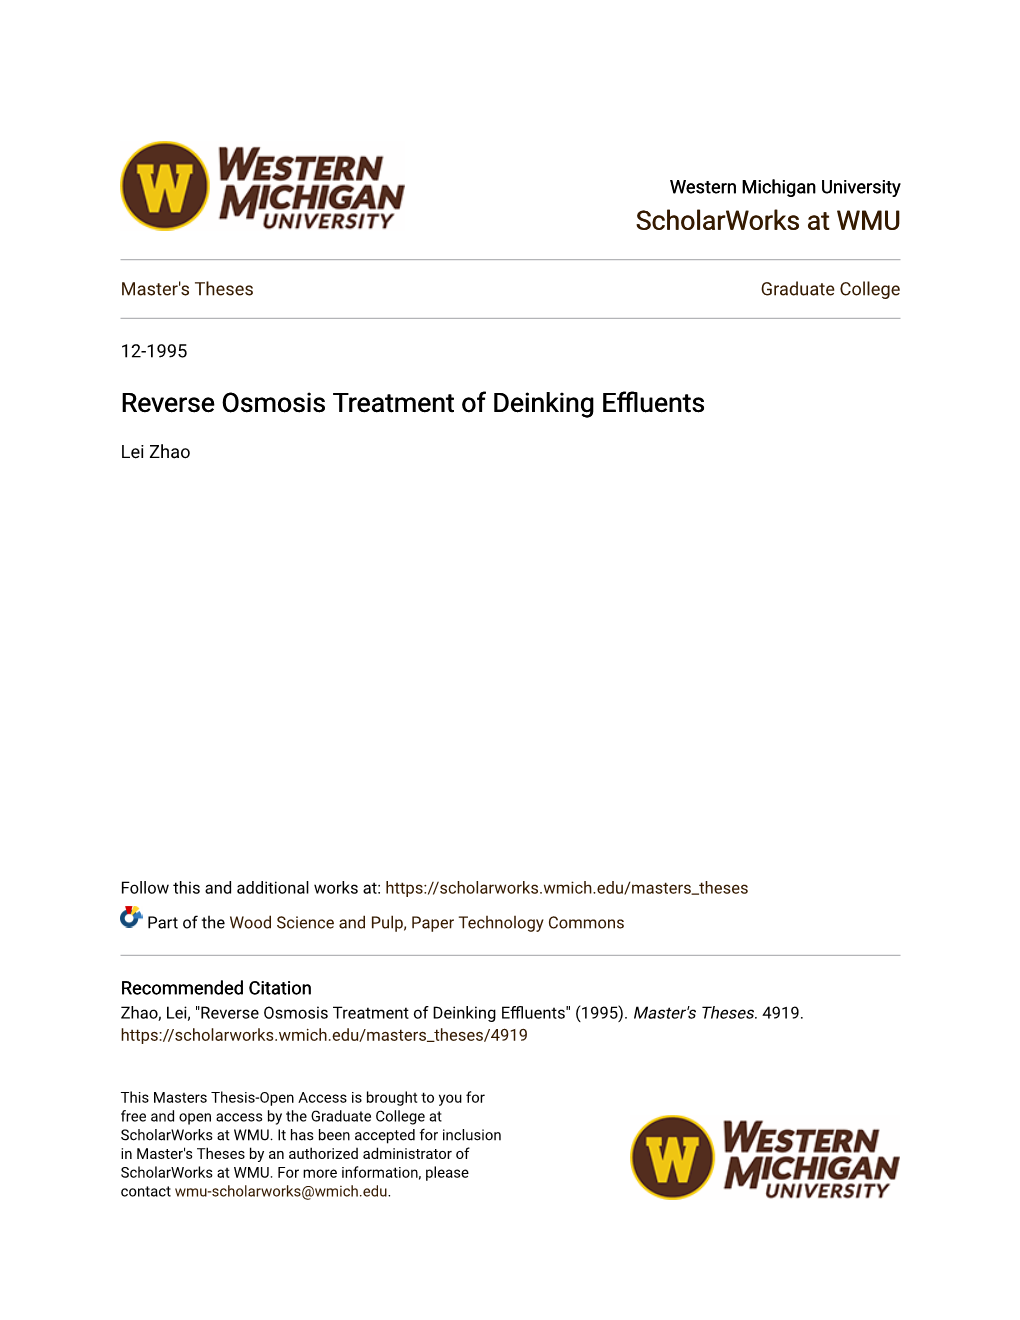 Reverse Osmosis Treatment of Deinking Effluents